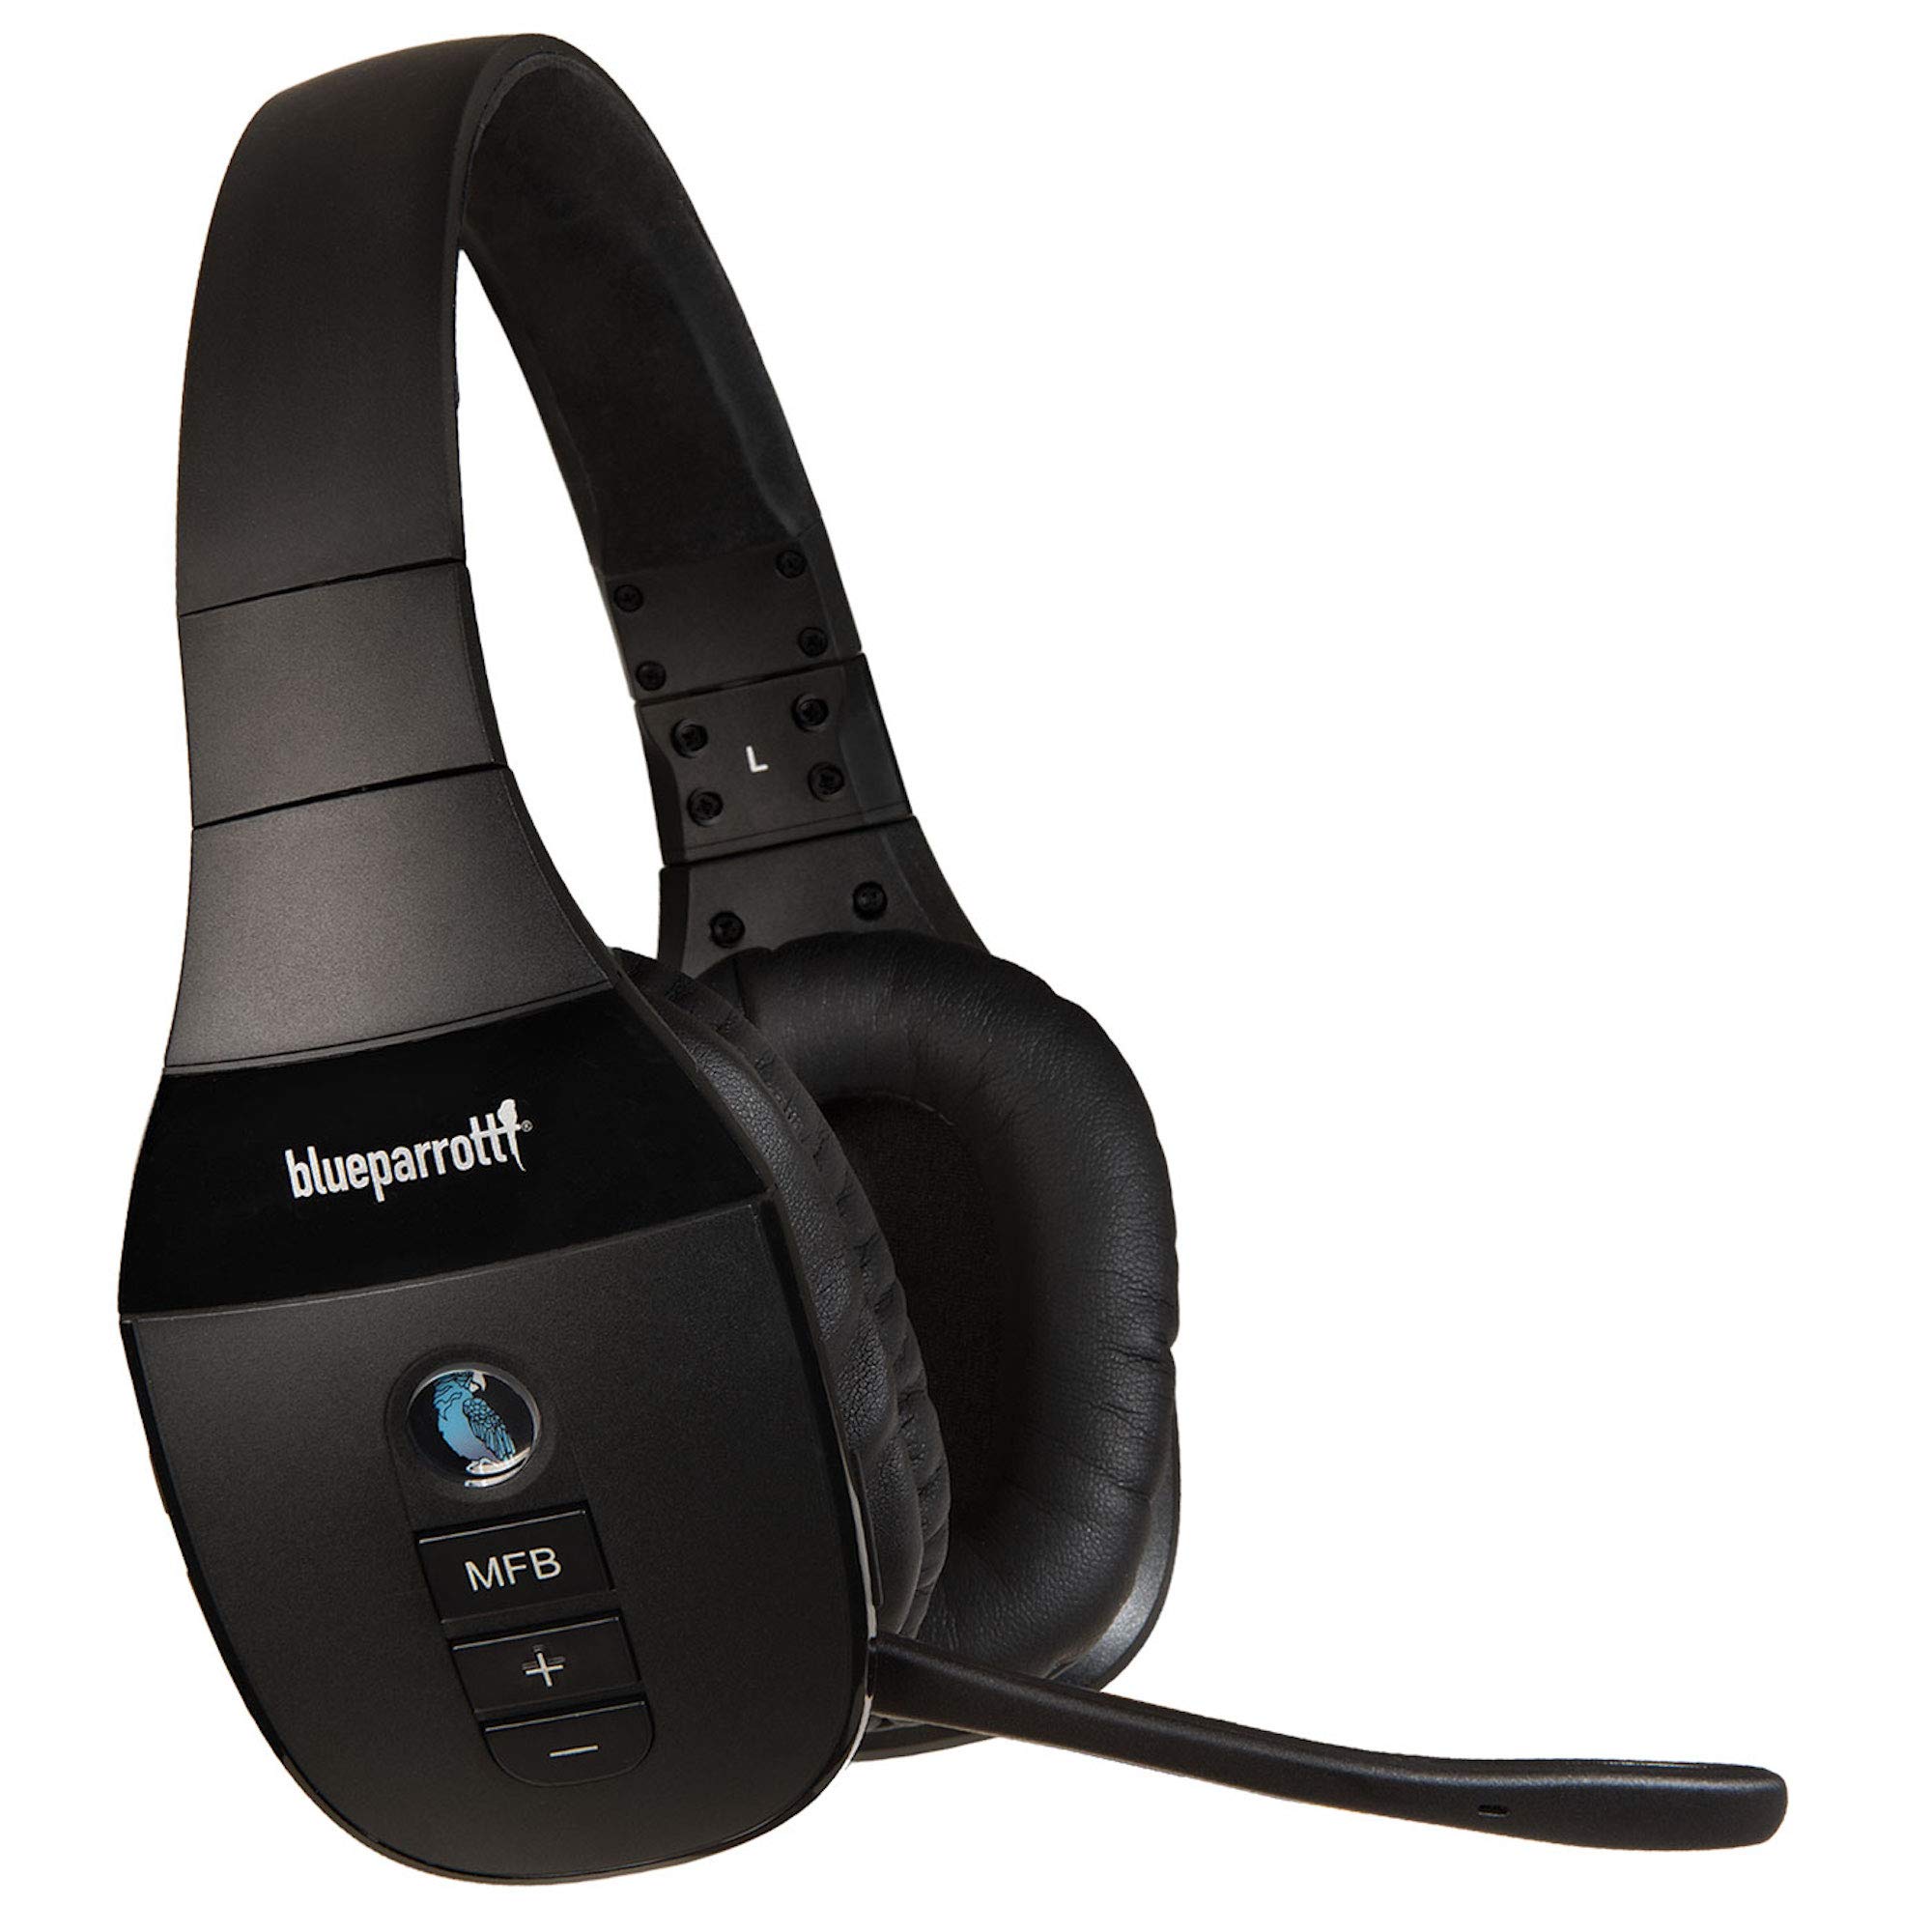 BlueParrott S450-XT 语音控制蓝牙耳机 – 行业领先的音质，无线距离远，极度舒适，通话时间长达 24 小时，黑色，立体声